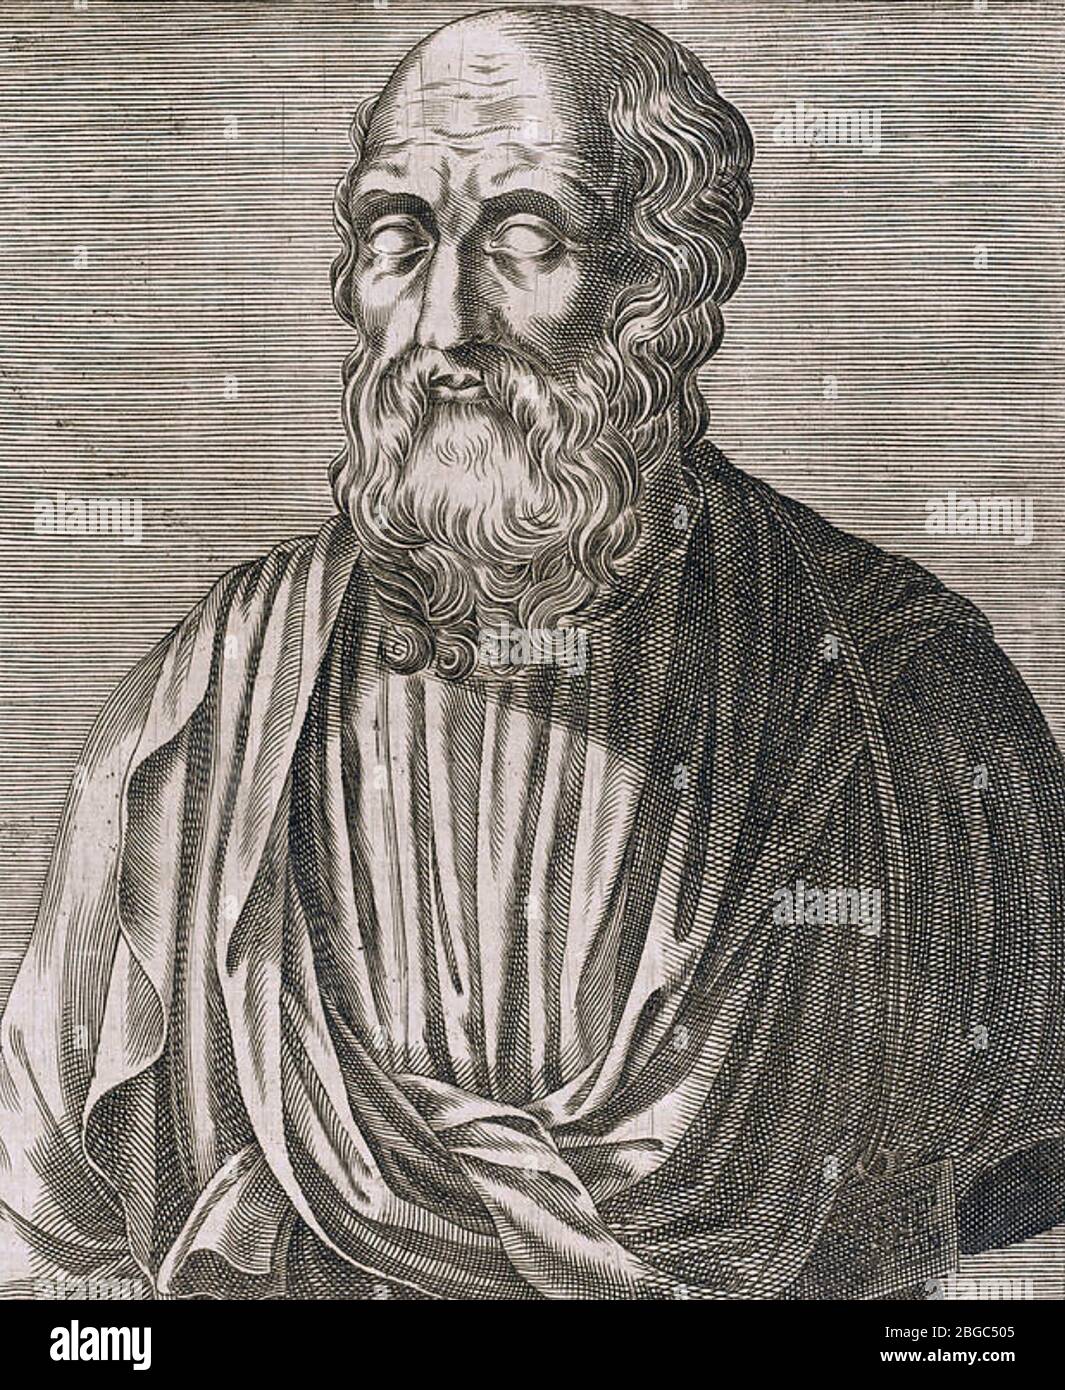 PLATO (c 427-c 348) Athenian philosopher in a 15th century woodcut engraving Stock Photo